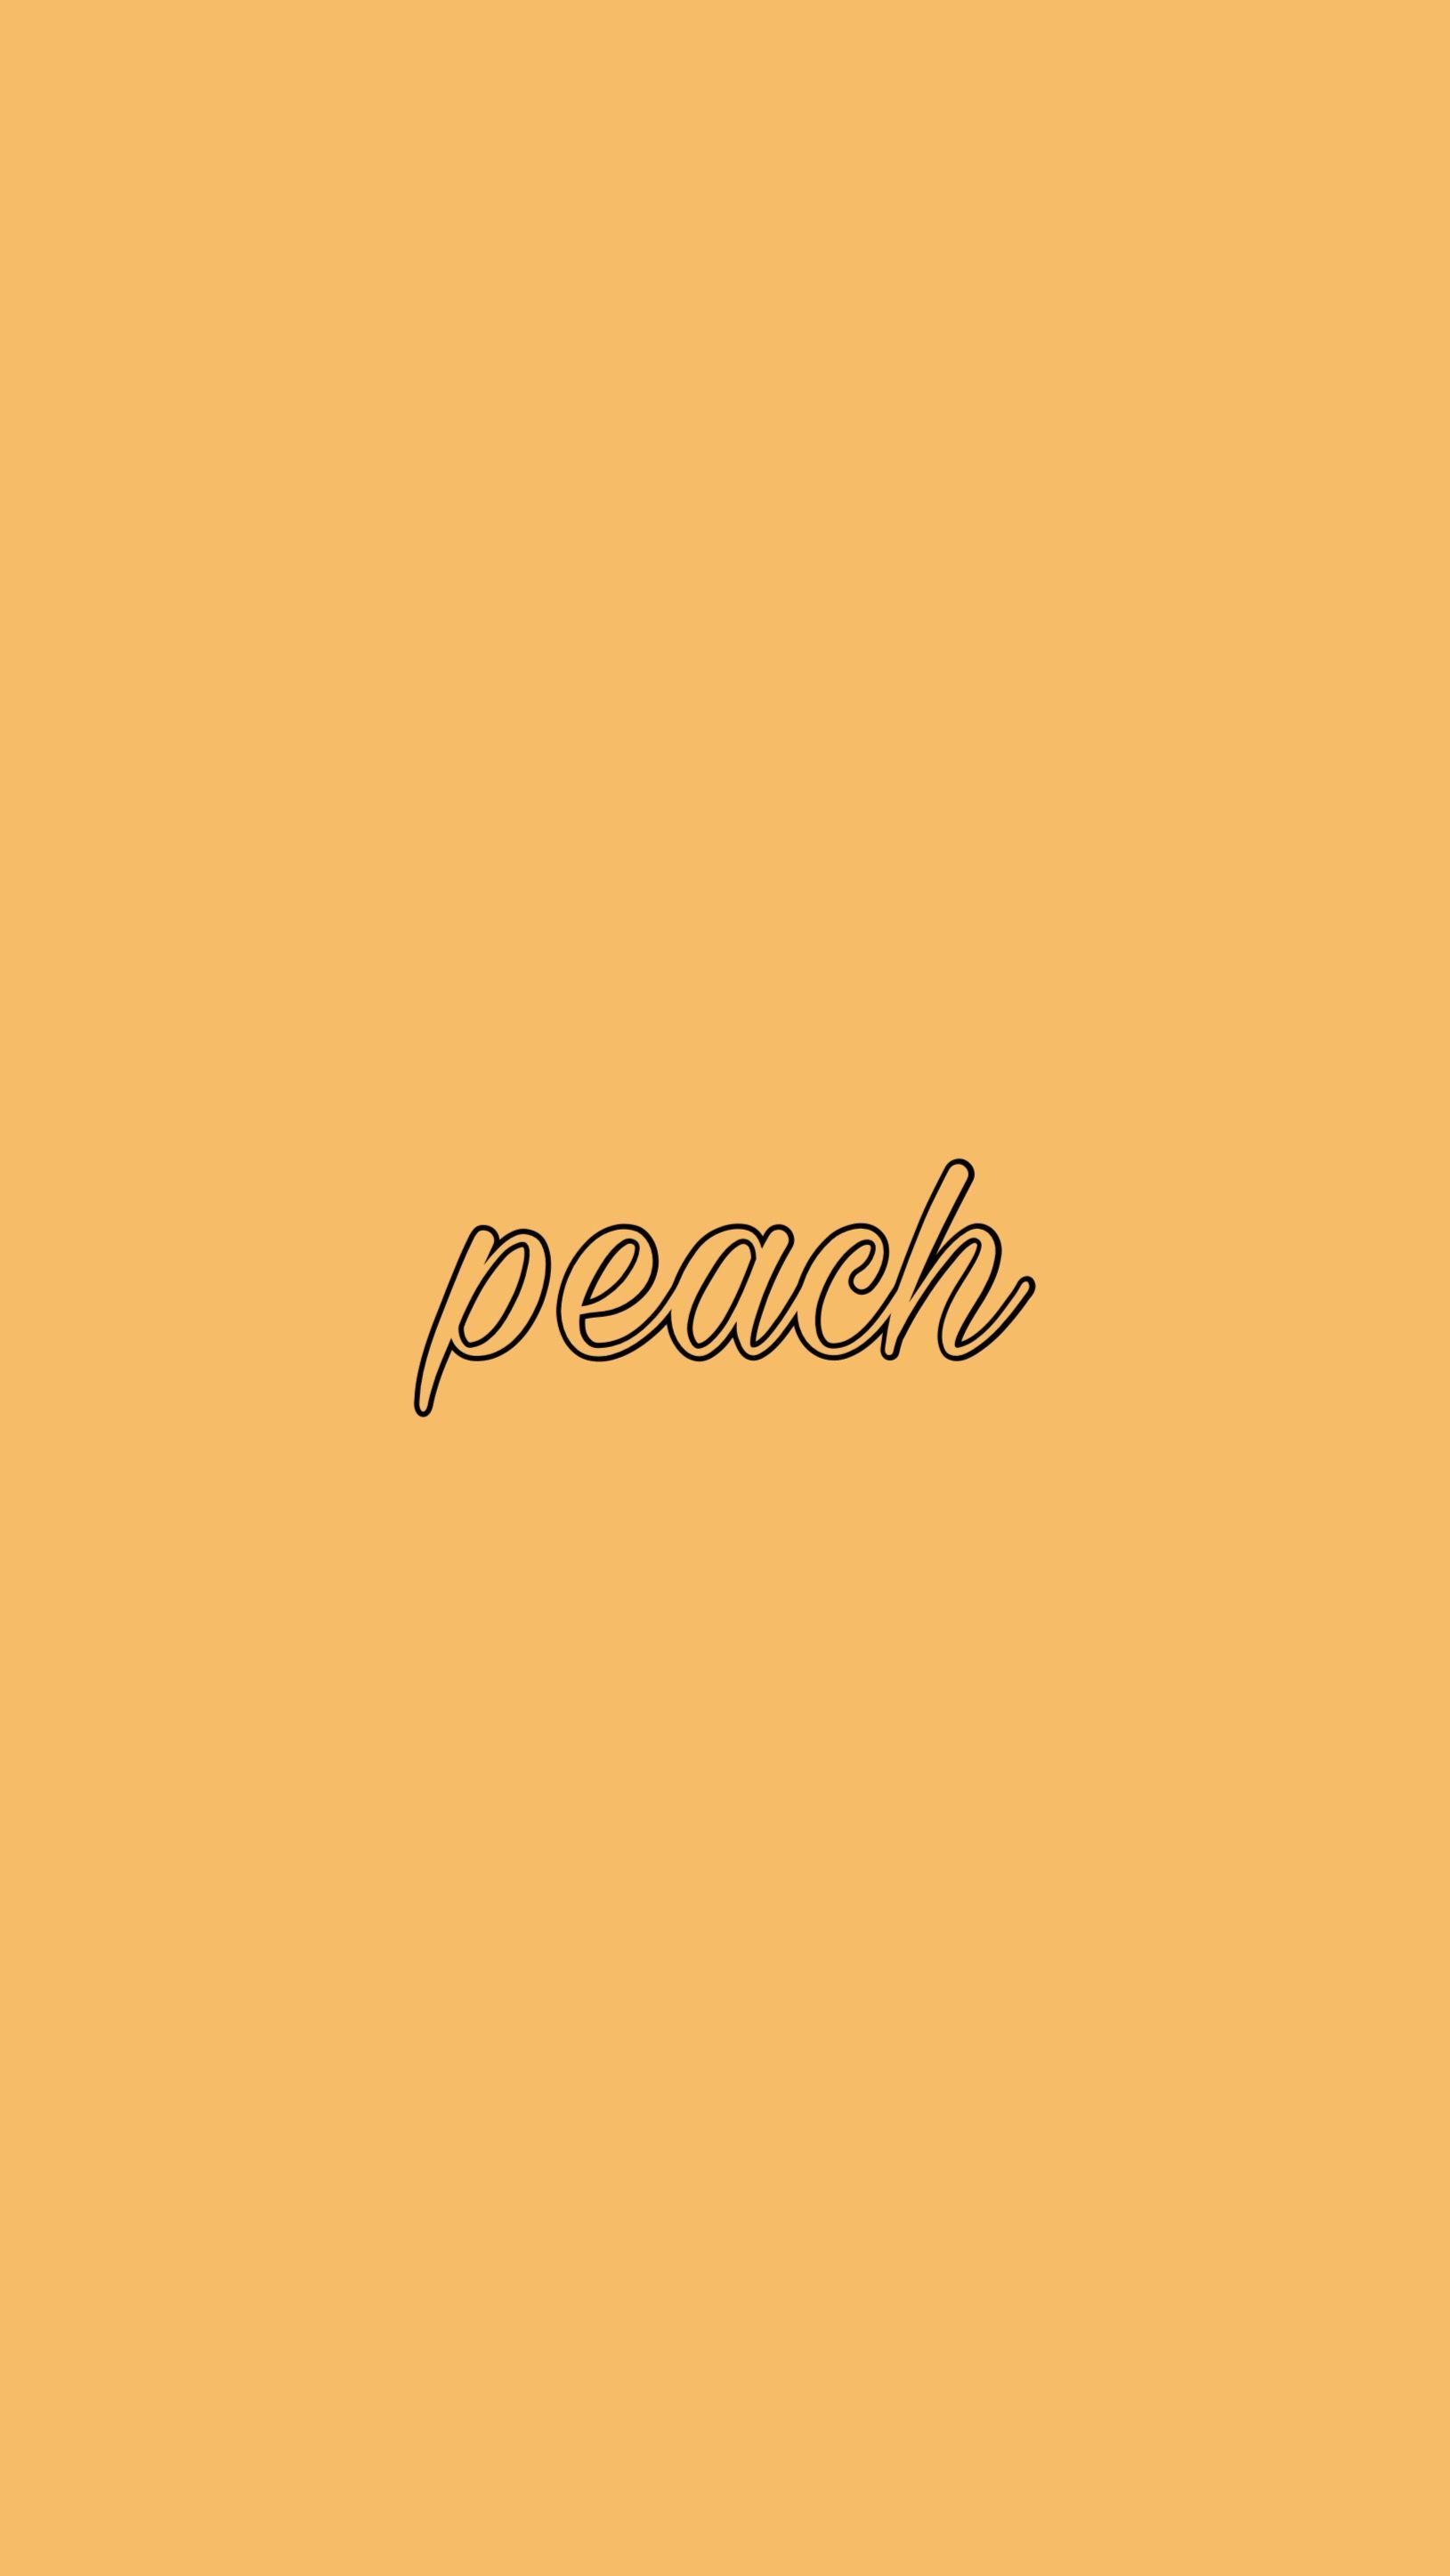 Peach aesthetic background wallpaper phone background aesthetic background wallpaper phone background - Pastel orange